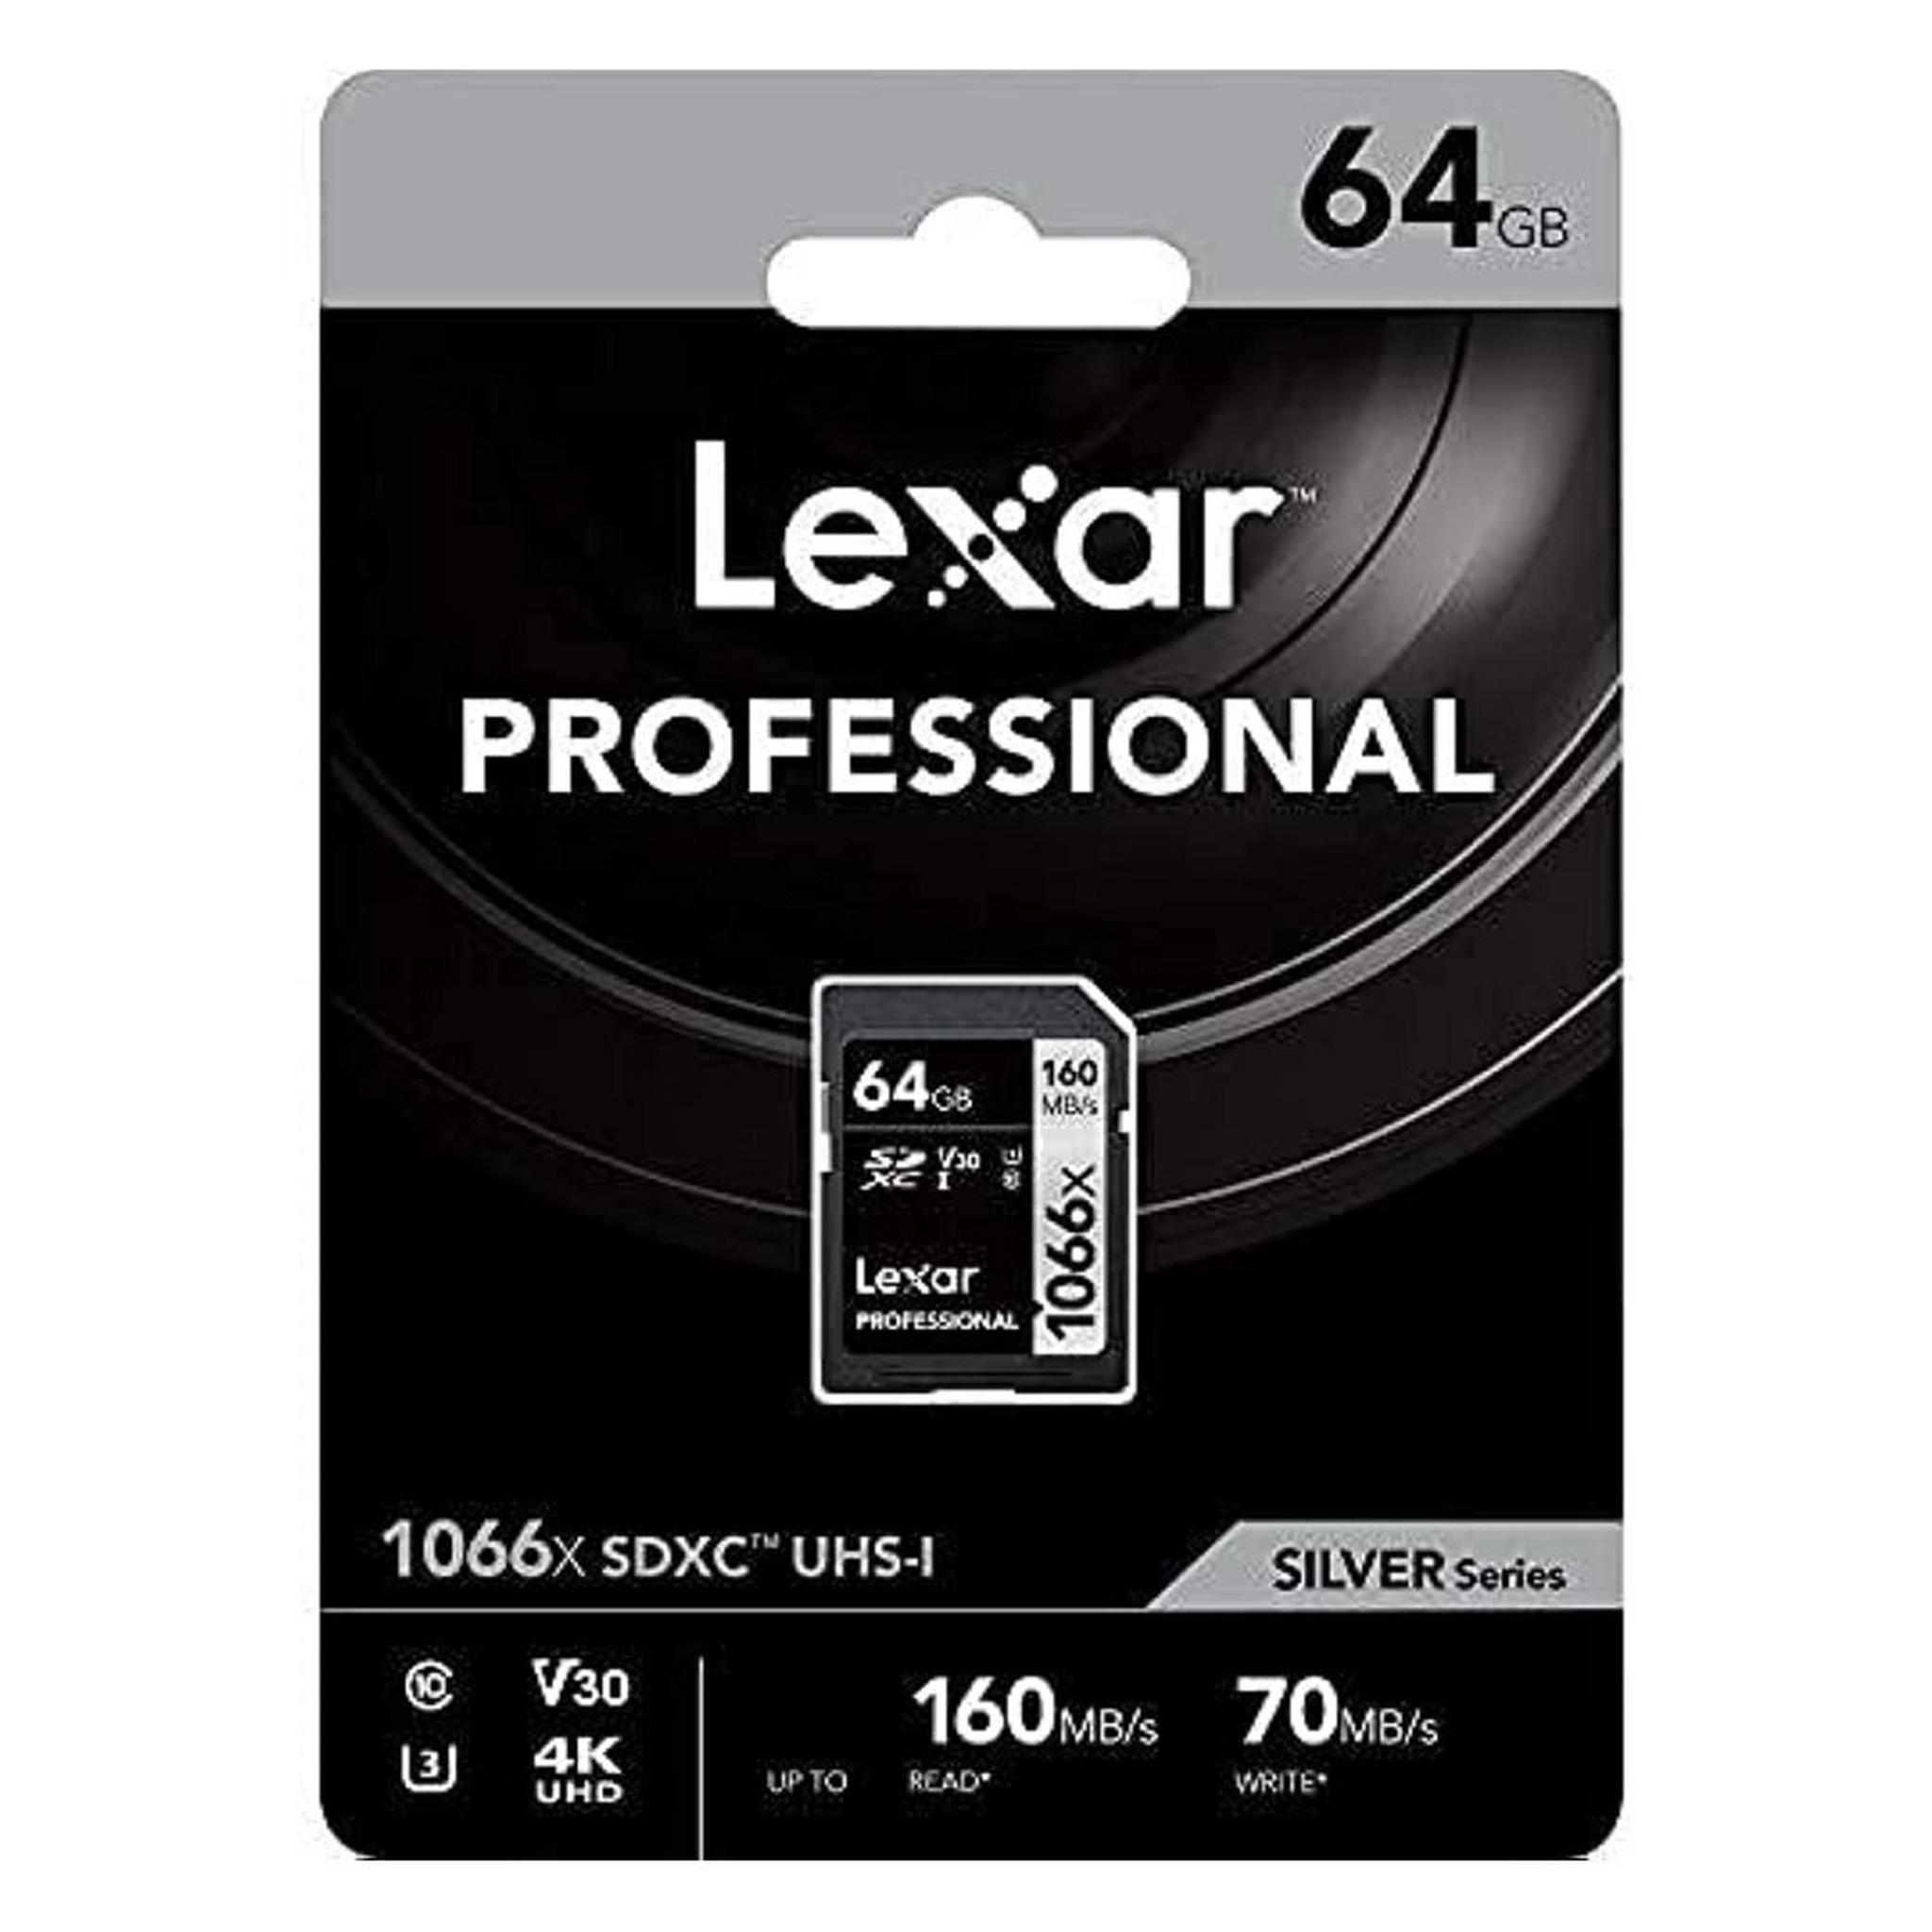 Lexar 1066x SDXC UHS-I Card SILVER Series, 64GB, LSD1066064G-BNNNG